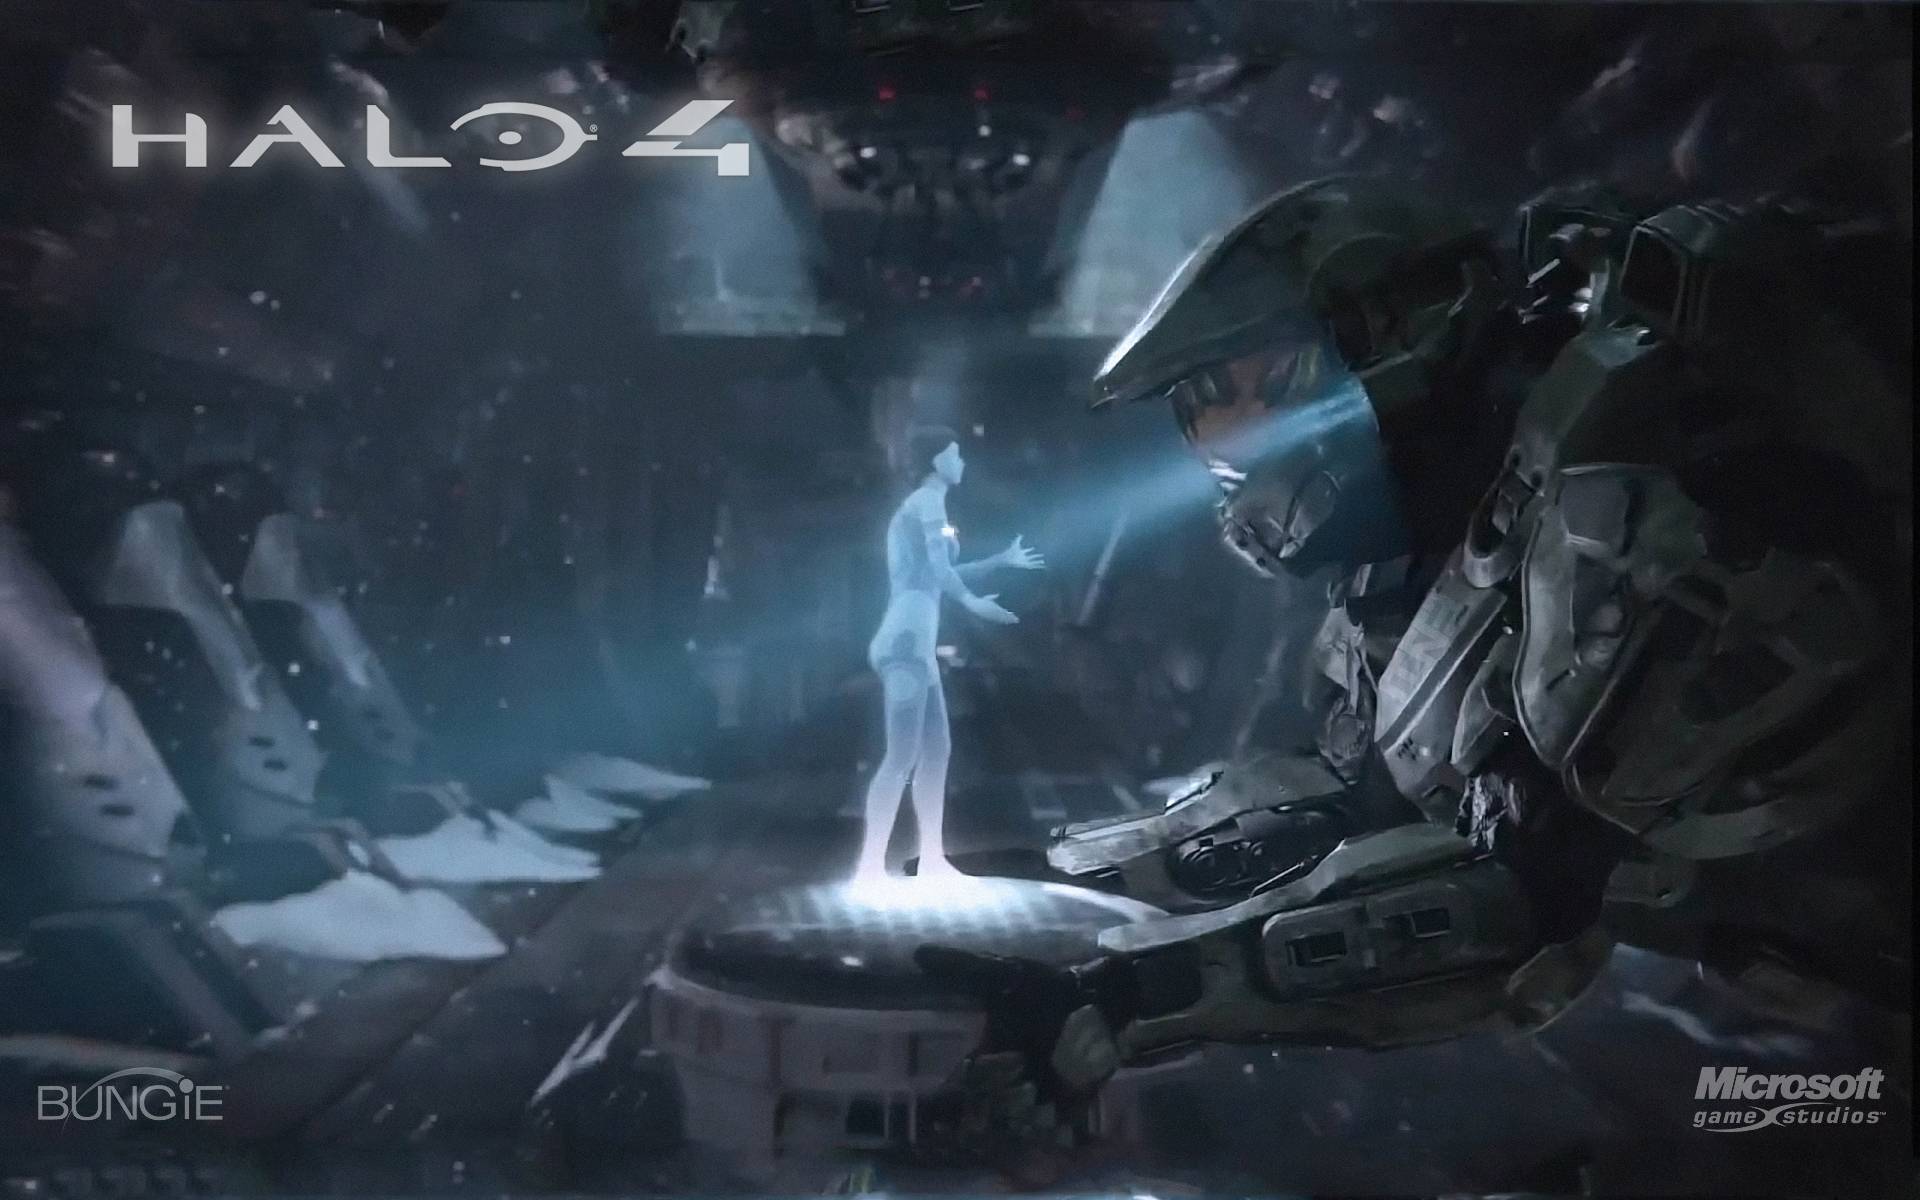 Halo 4 wallpaper hd